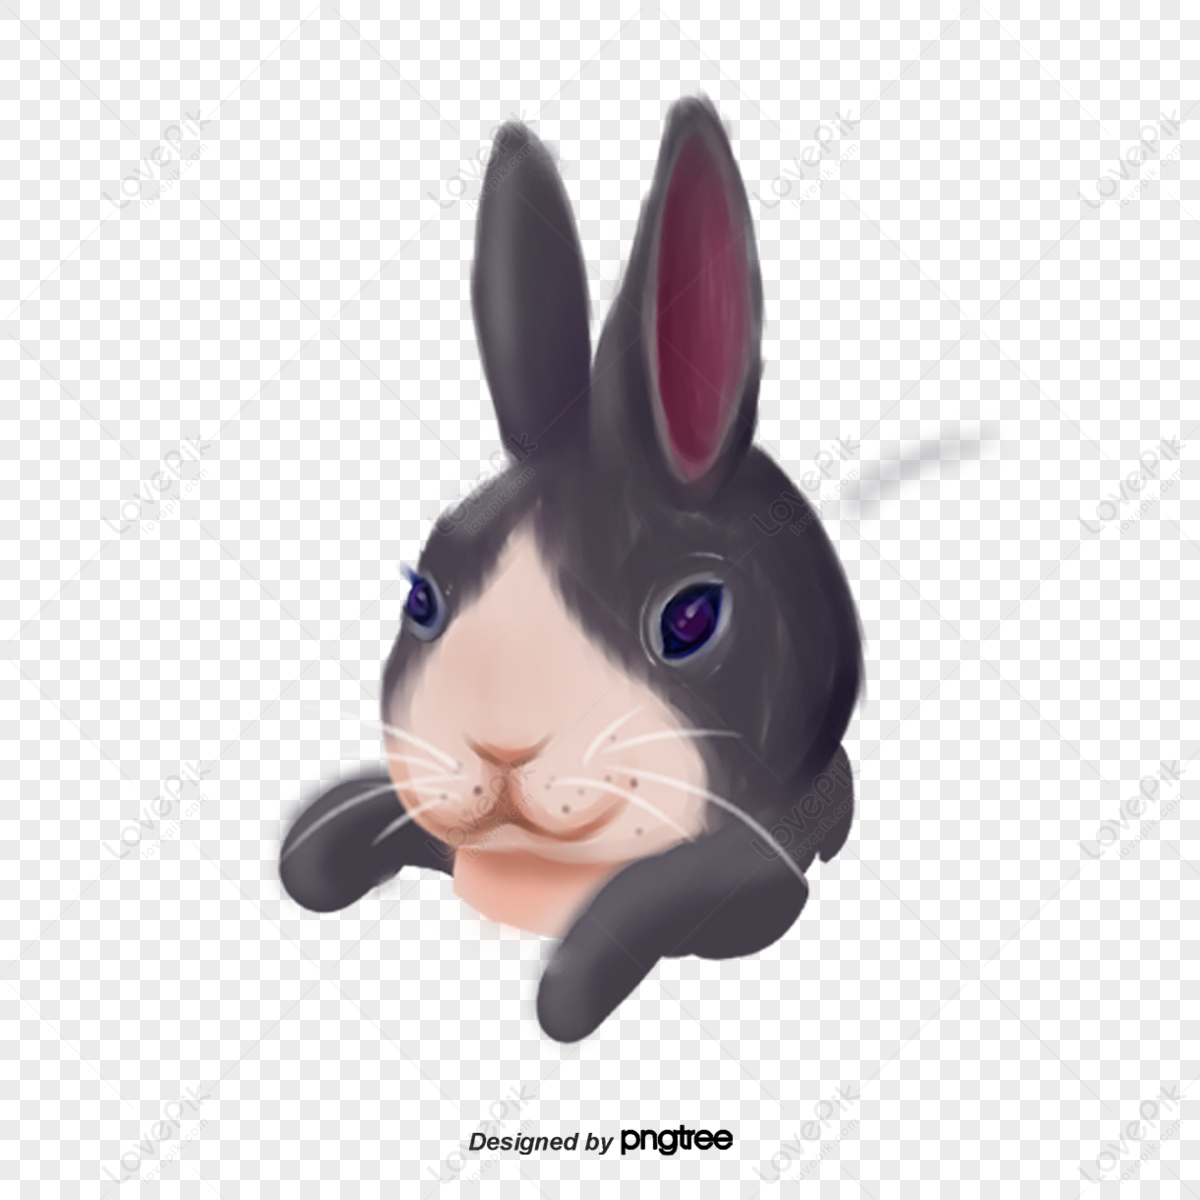 Black Rabbit PNG Images With Transparent Background